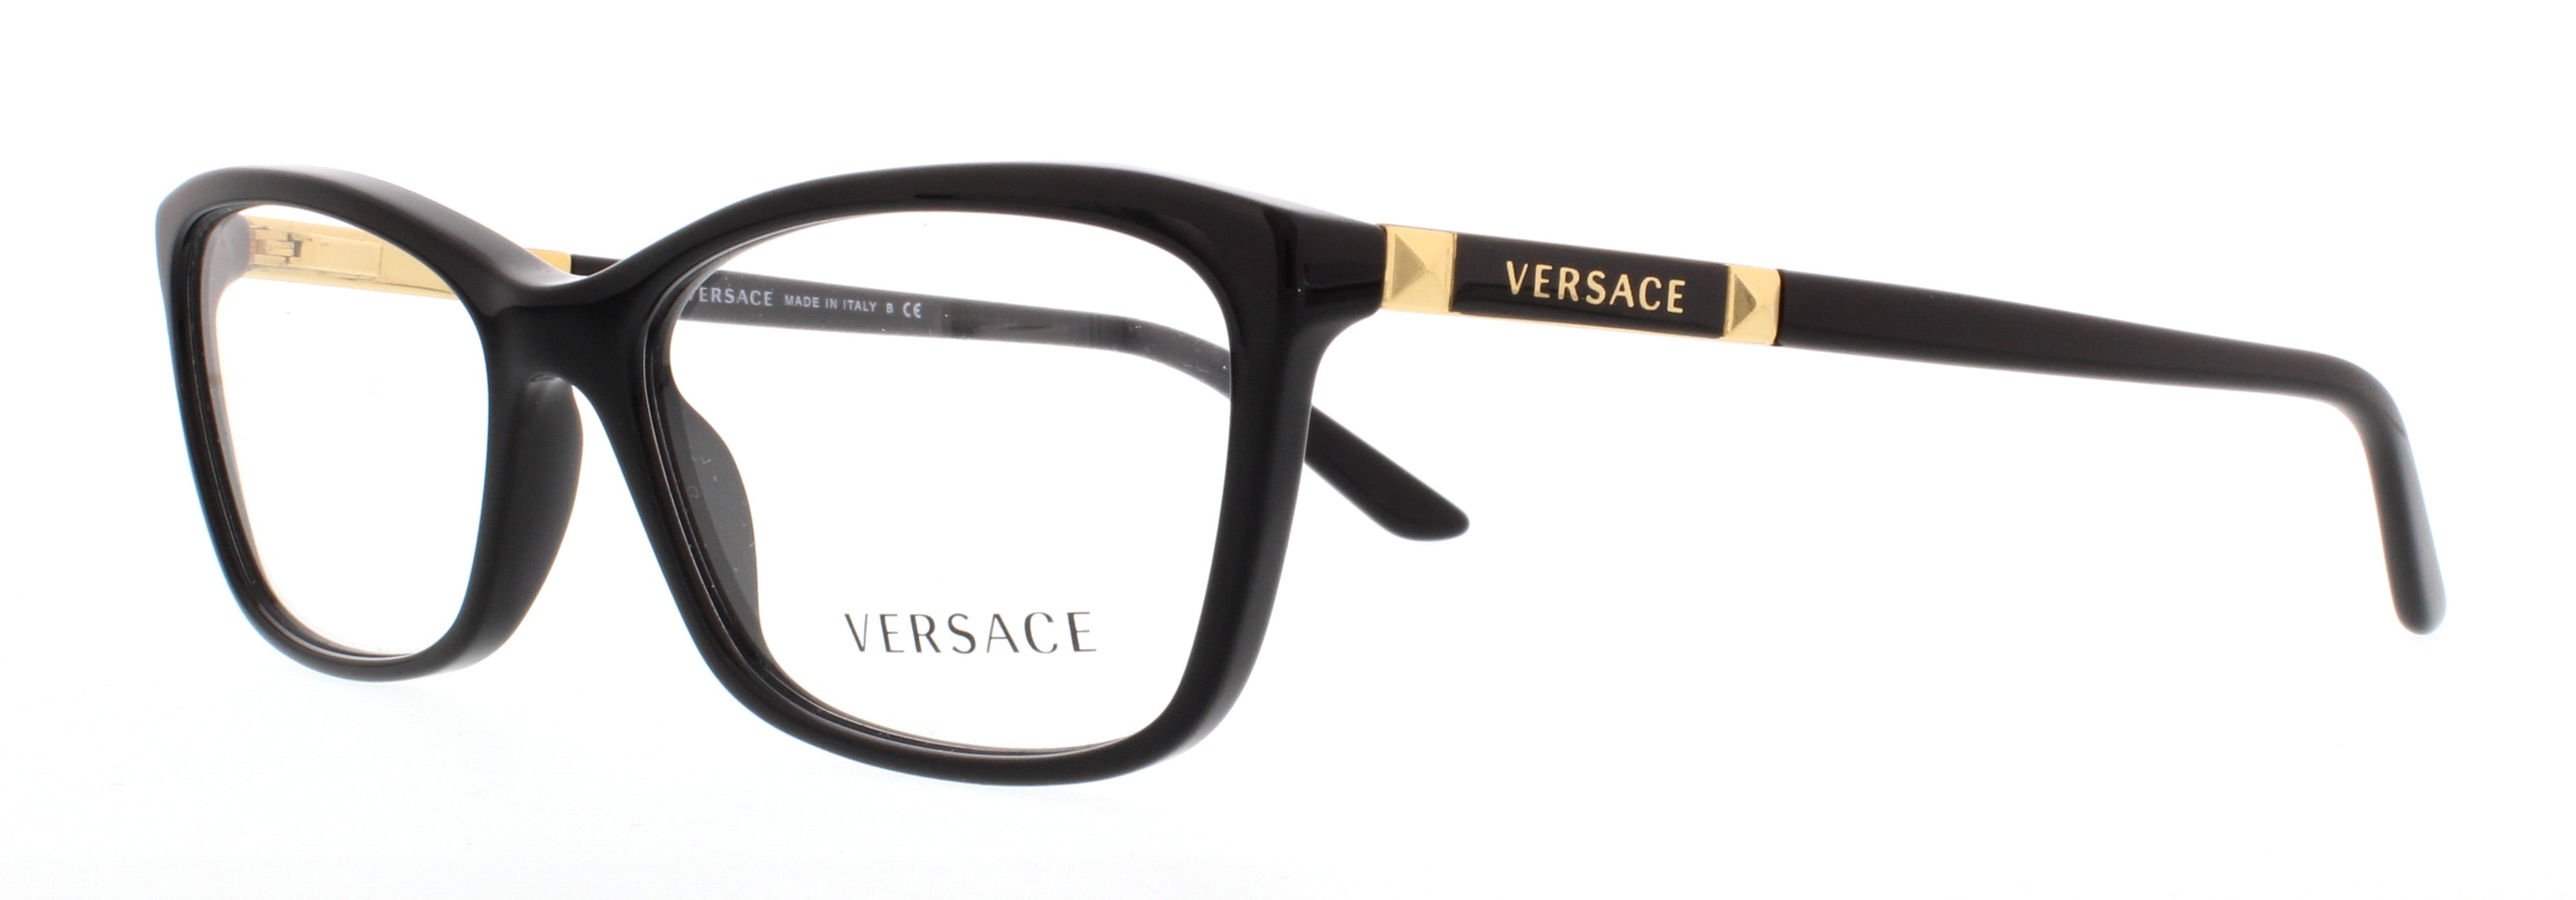 VERSACE Eyeglasses VE 3186 GB1 Black 54MM - Walmart.com